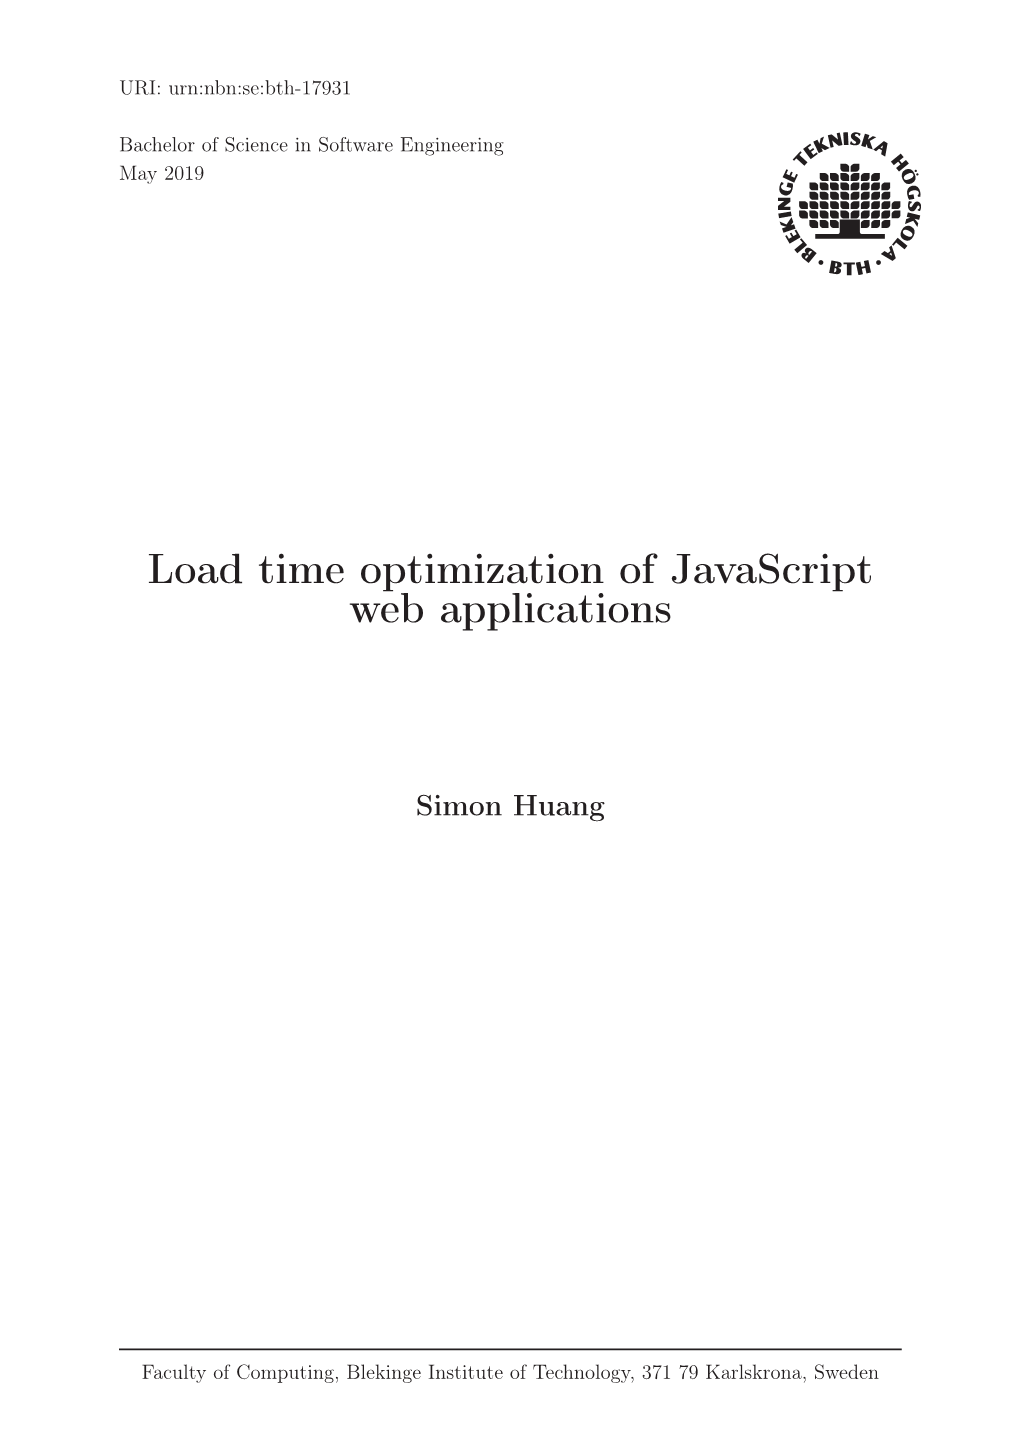 Load Time Optimization of Javascript Web Applications